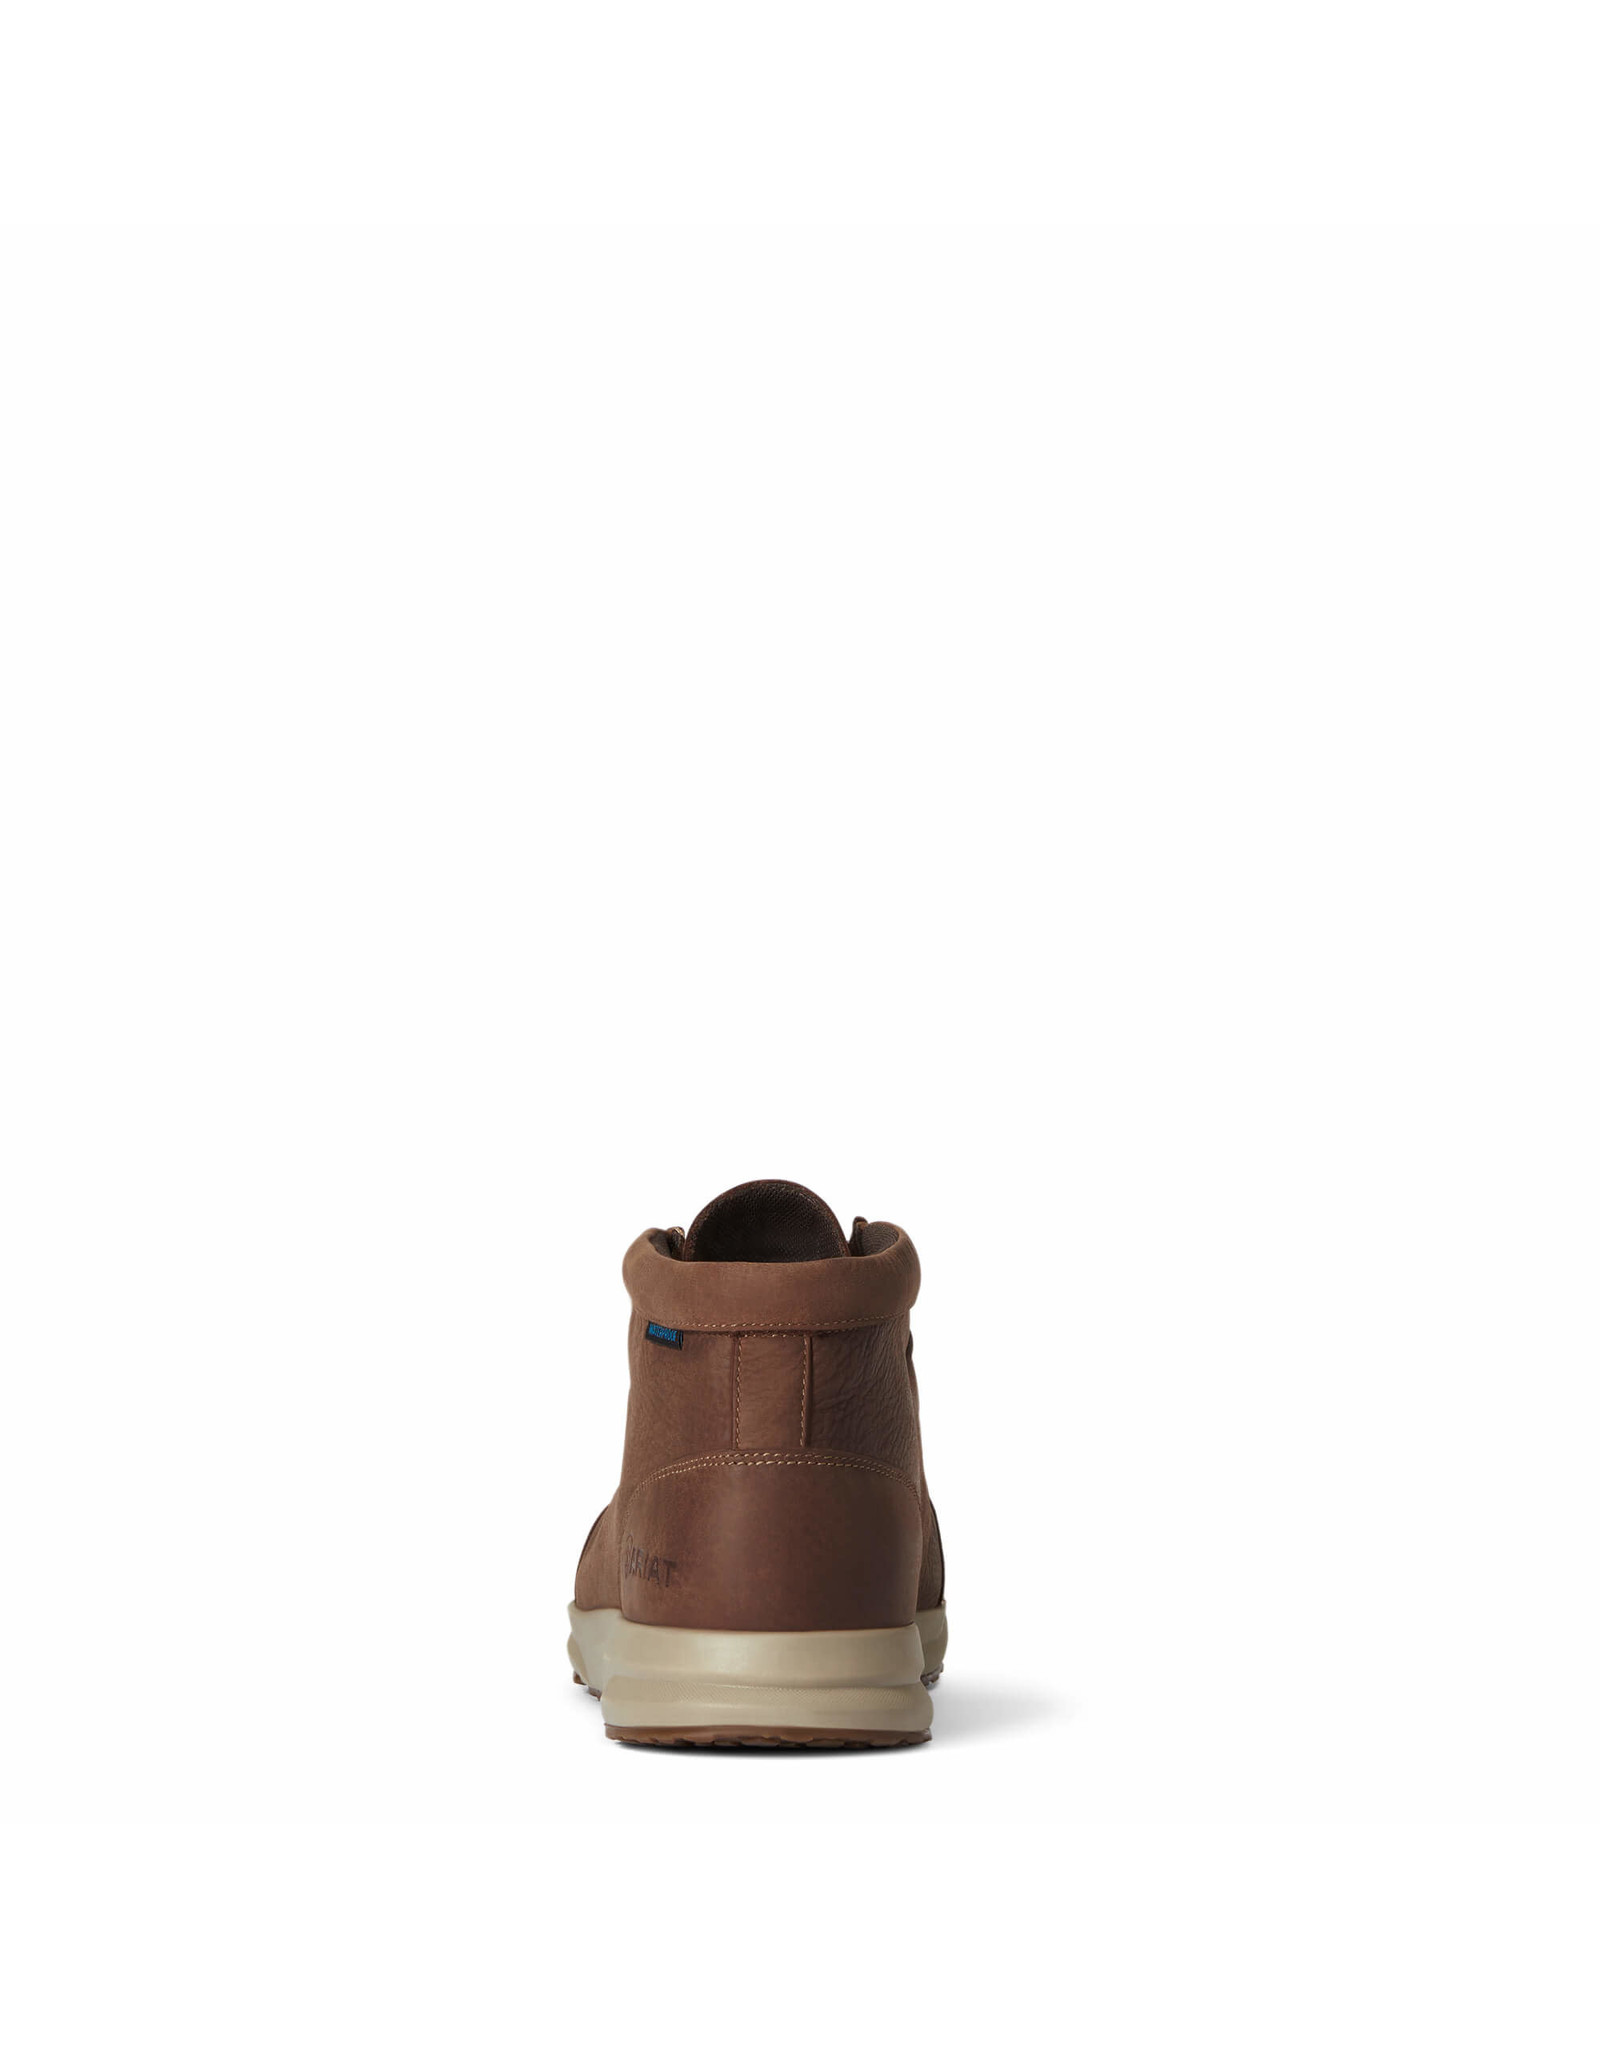 Ariat Men's Spitfire 10038479 Casual Waterproof Shoes